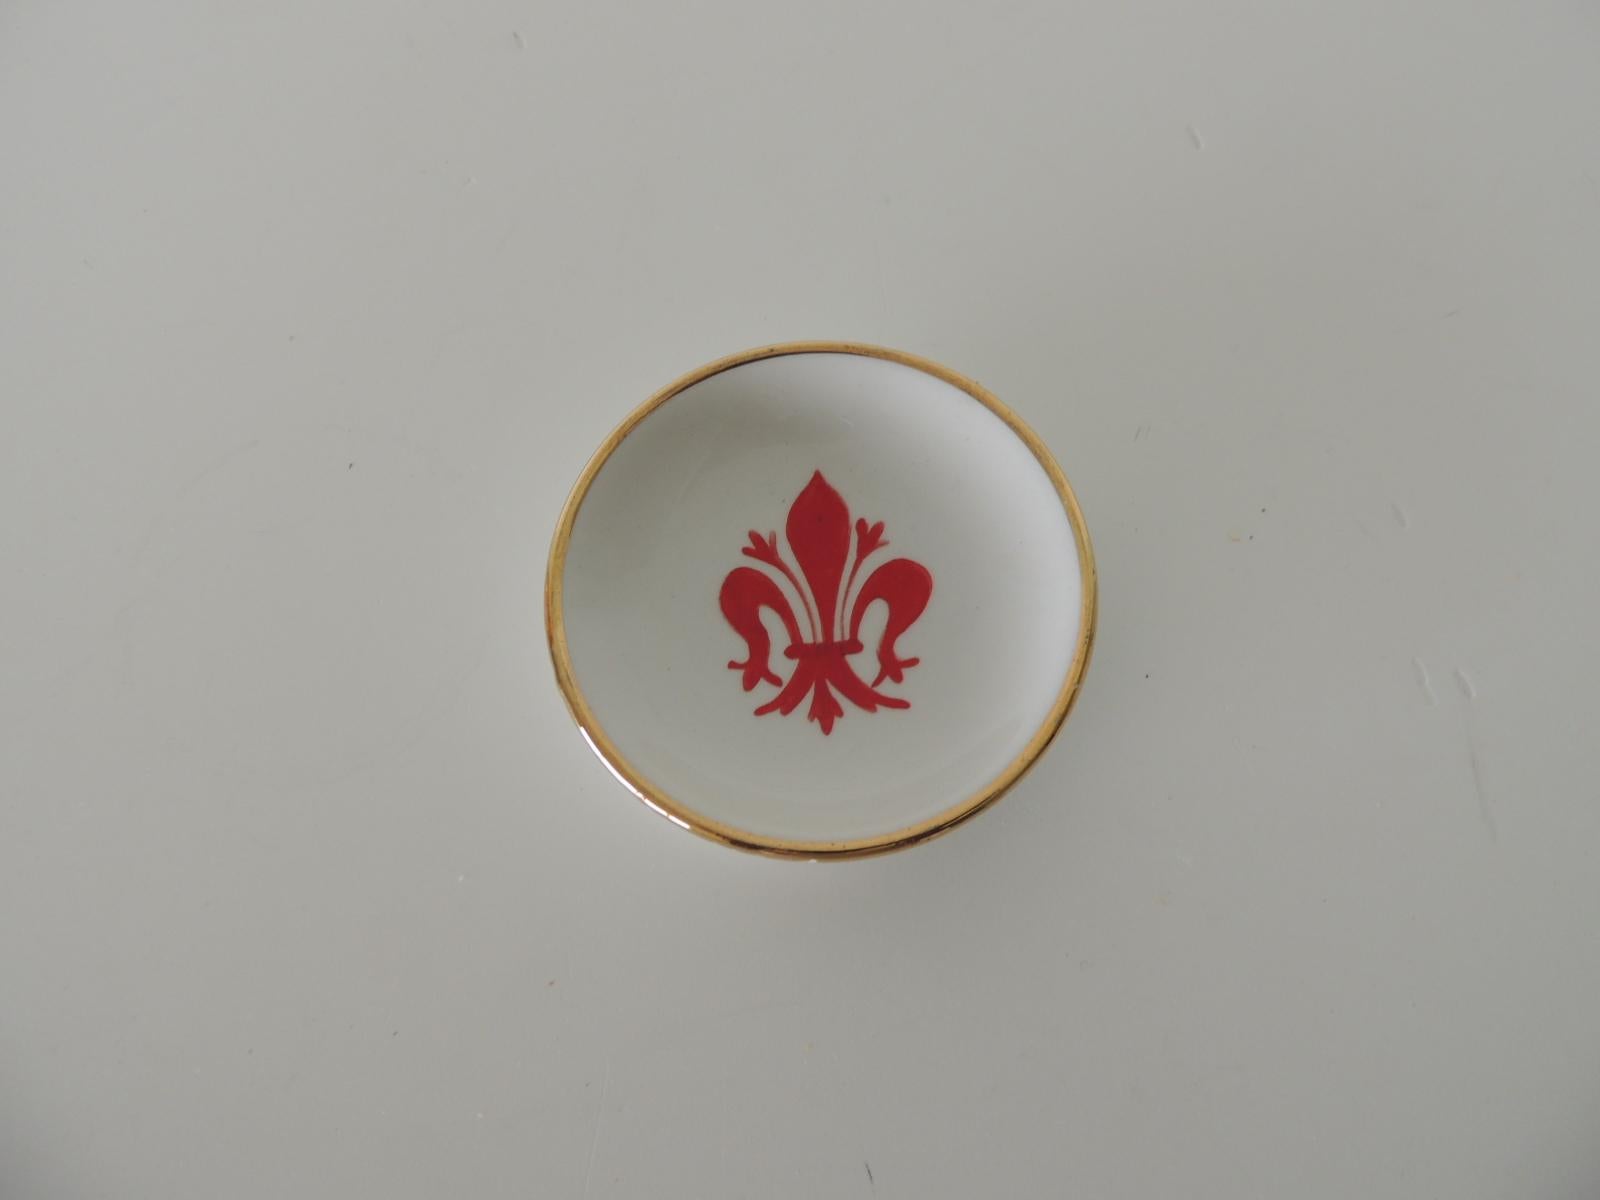 Vintage fleur-de-lis red and gold Italian porcelain trinket dish
Stamped Firenze, Italy
Size: 3.5